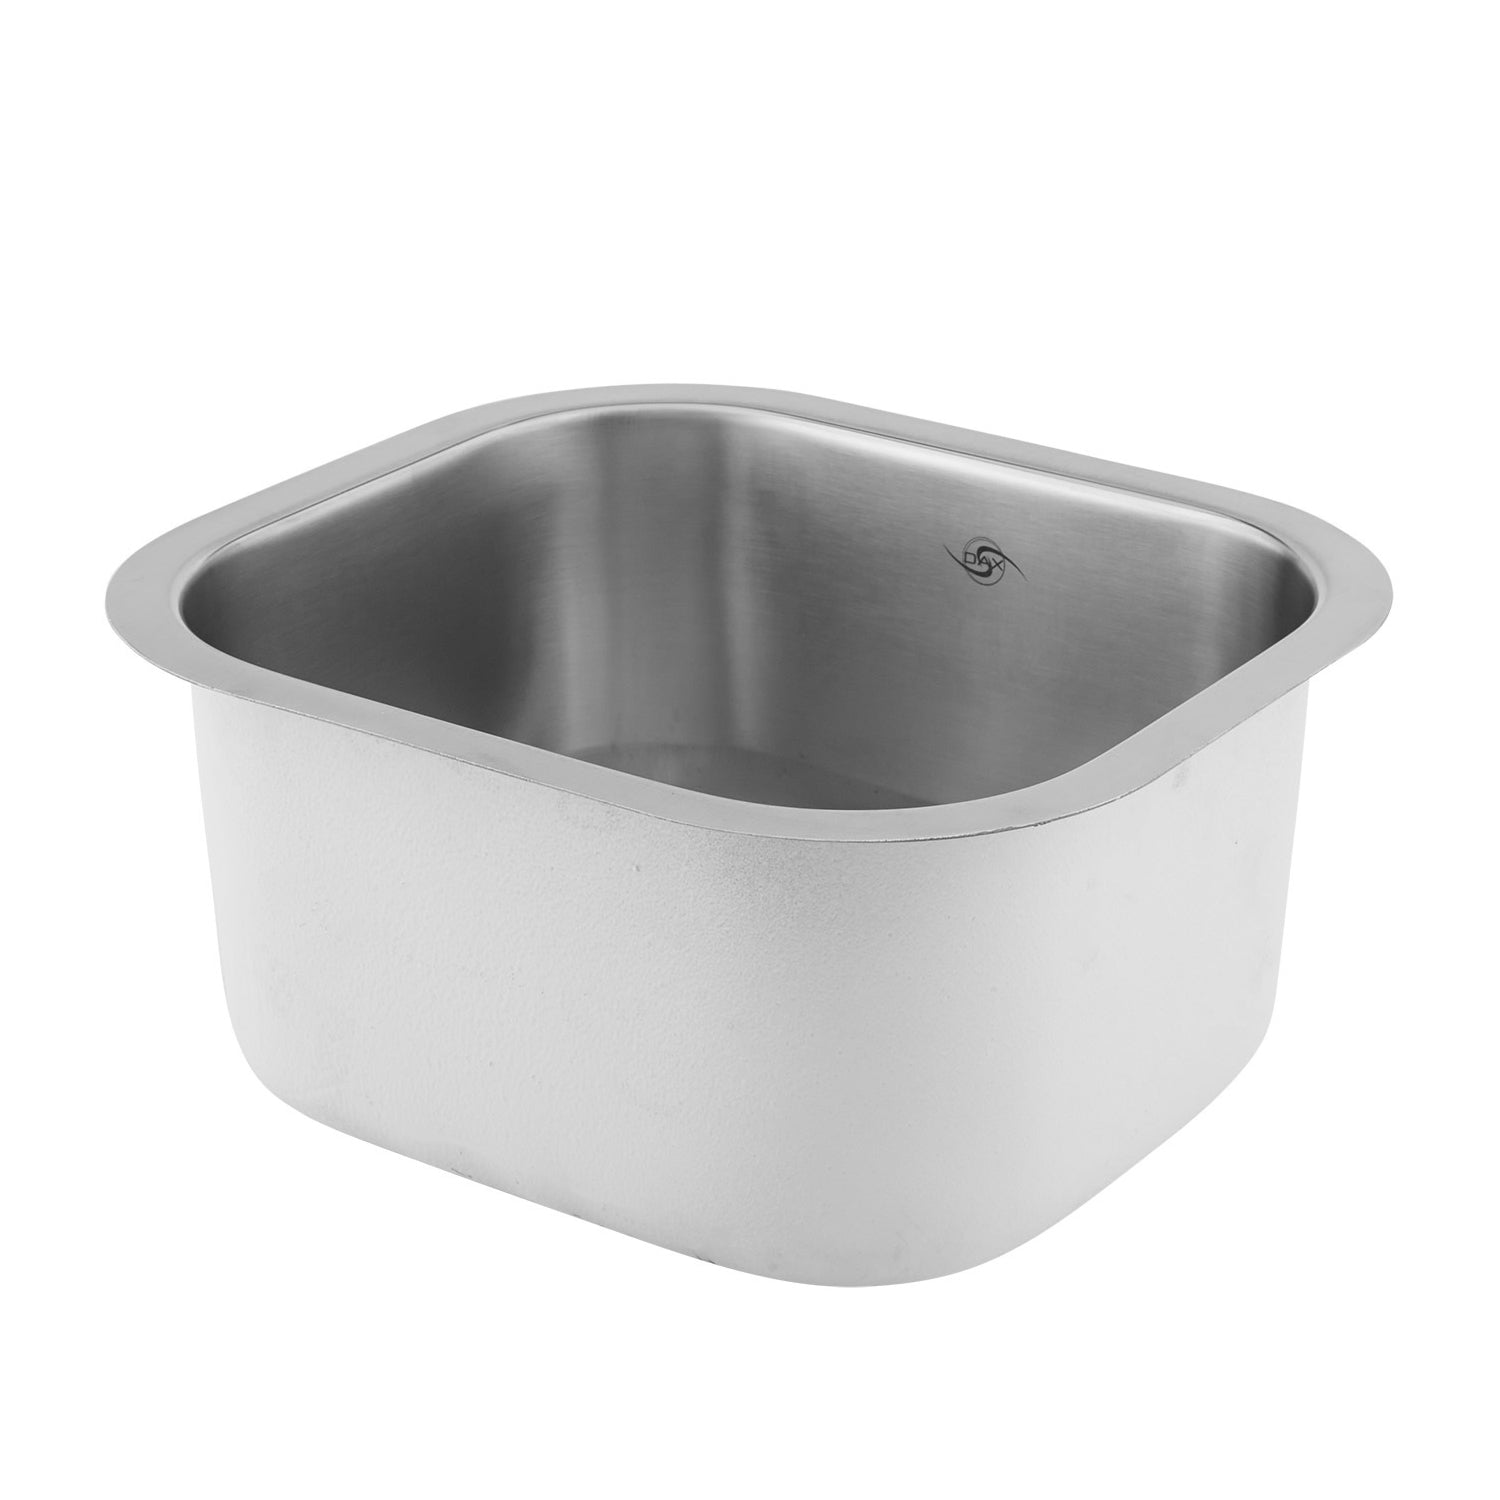 DAX Single Bowl Undermount Kitchen Sink, 18 Gauge Stainless Steel, Brushed Finish , 14-1/2 x 13 x 7 Inches (DAX-1214)